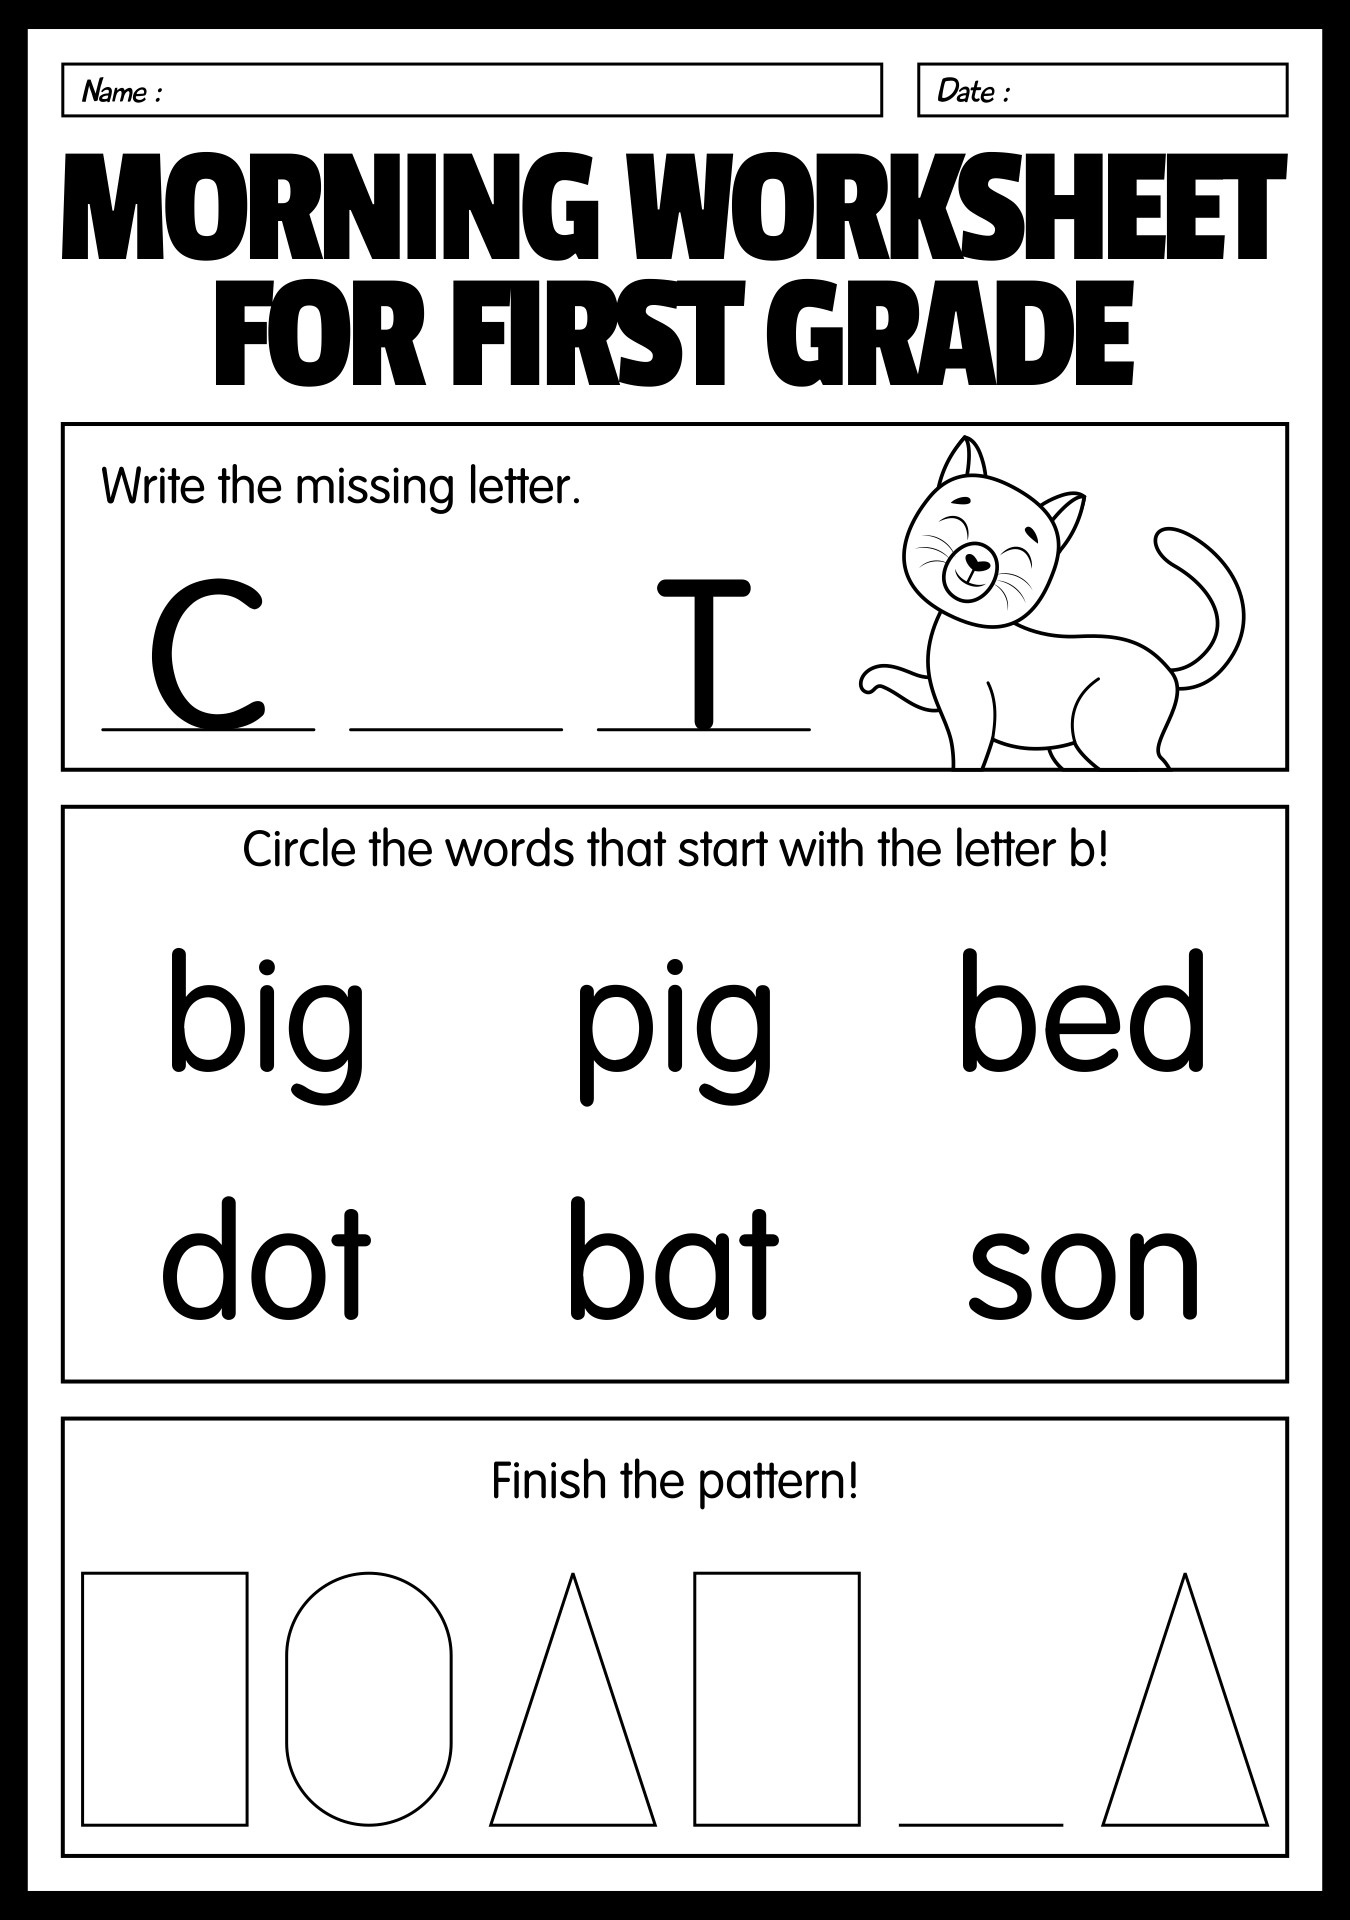 First Grade Morning Worksheet Tasks